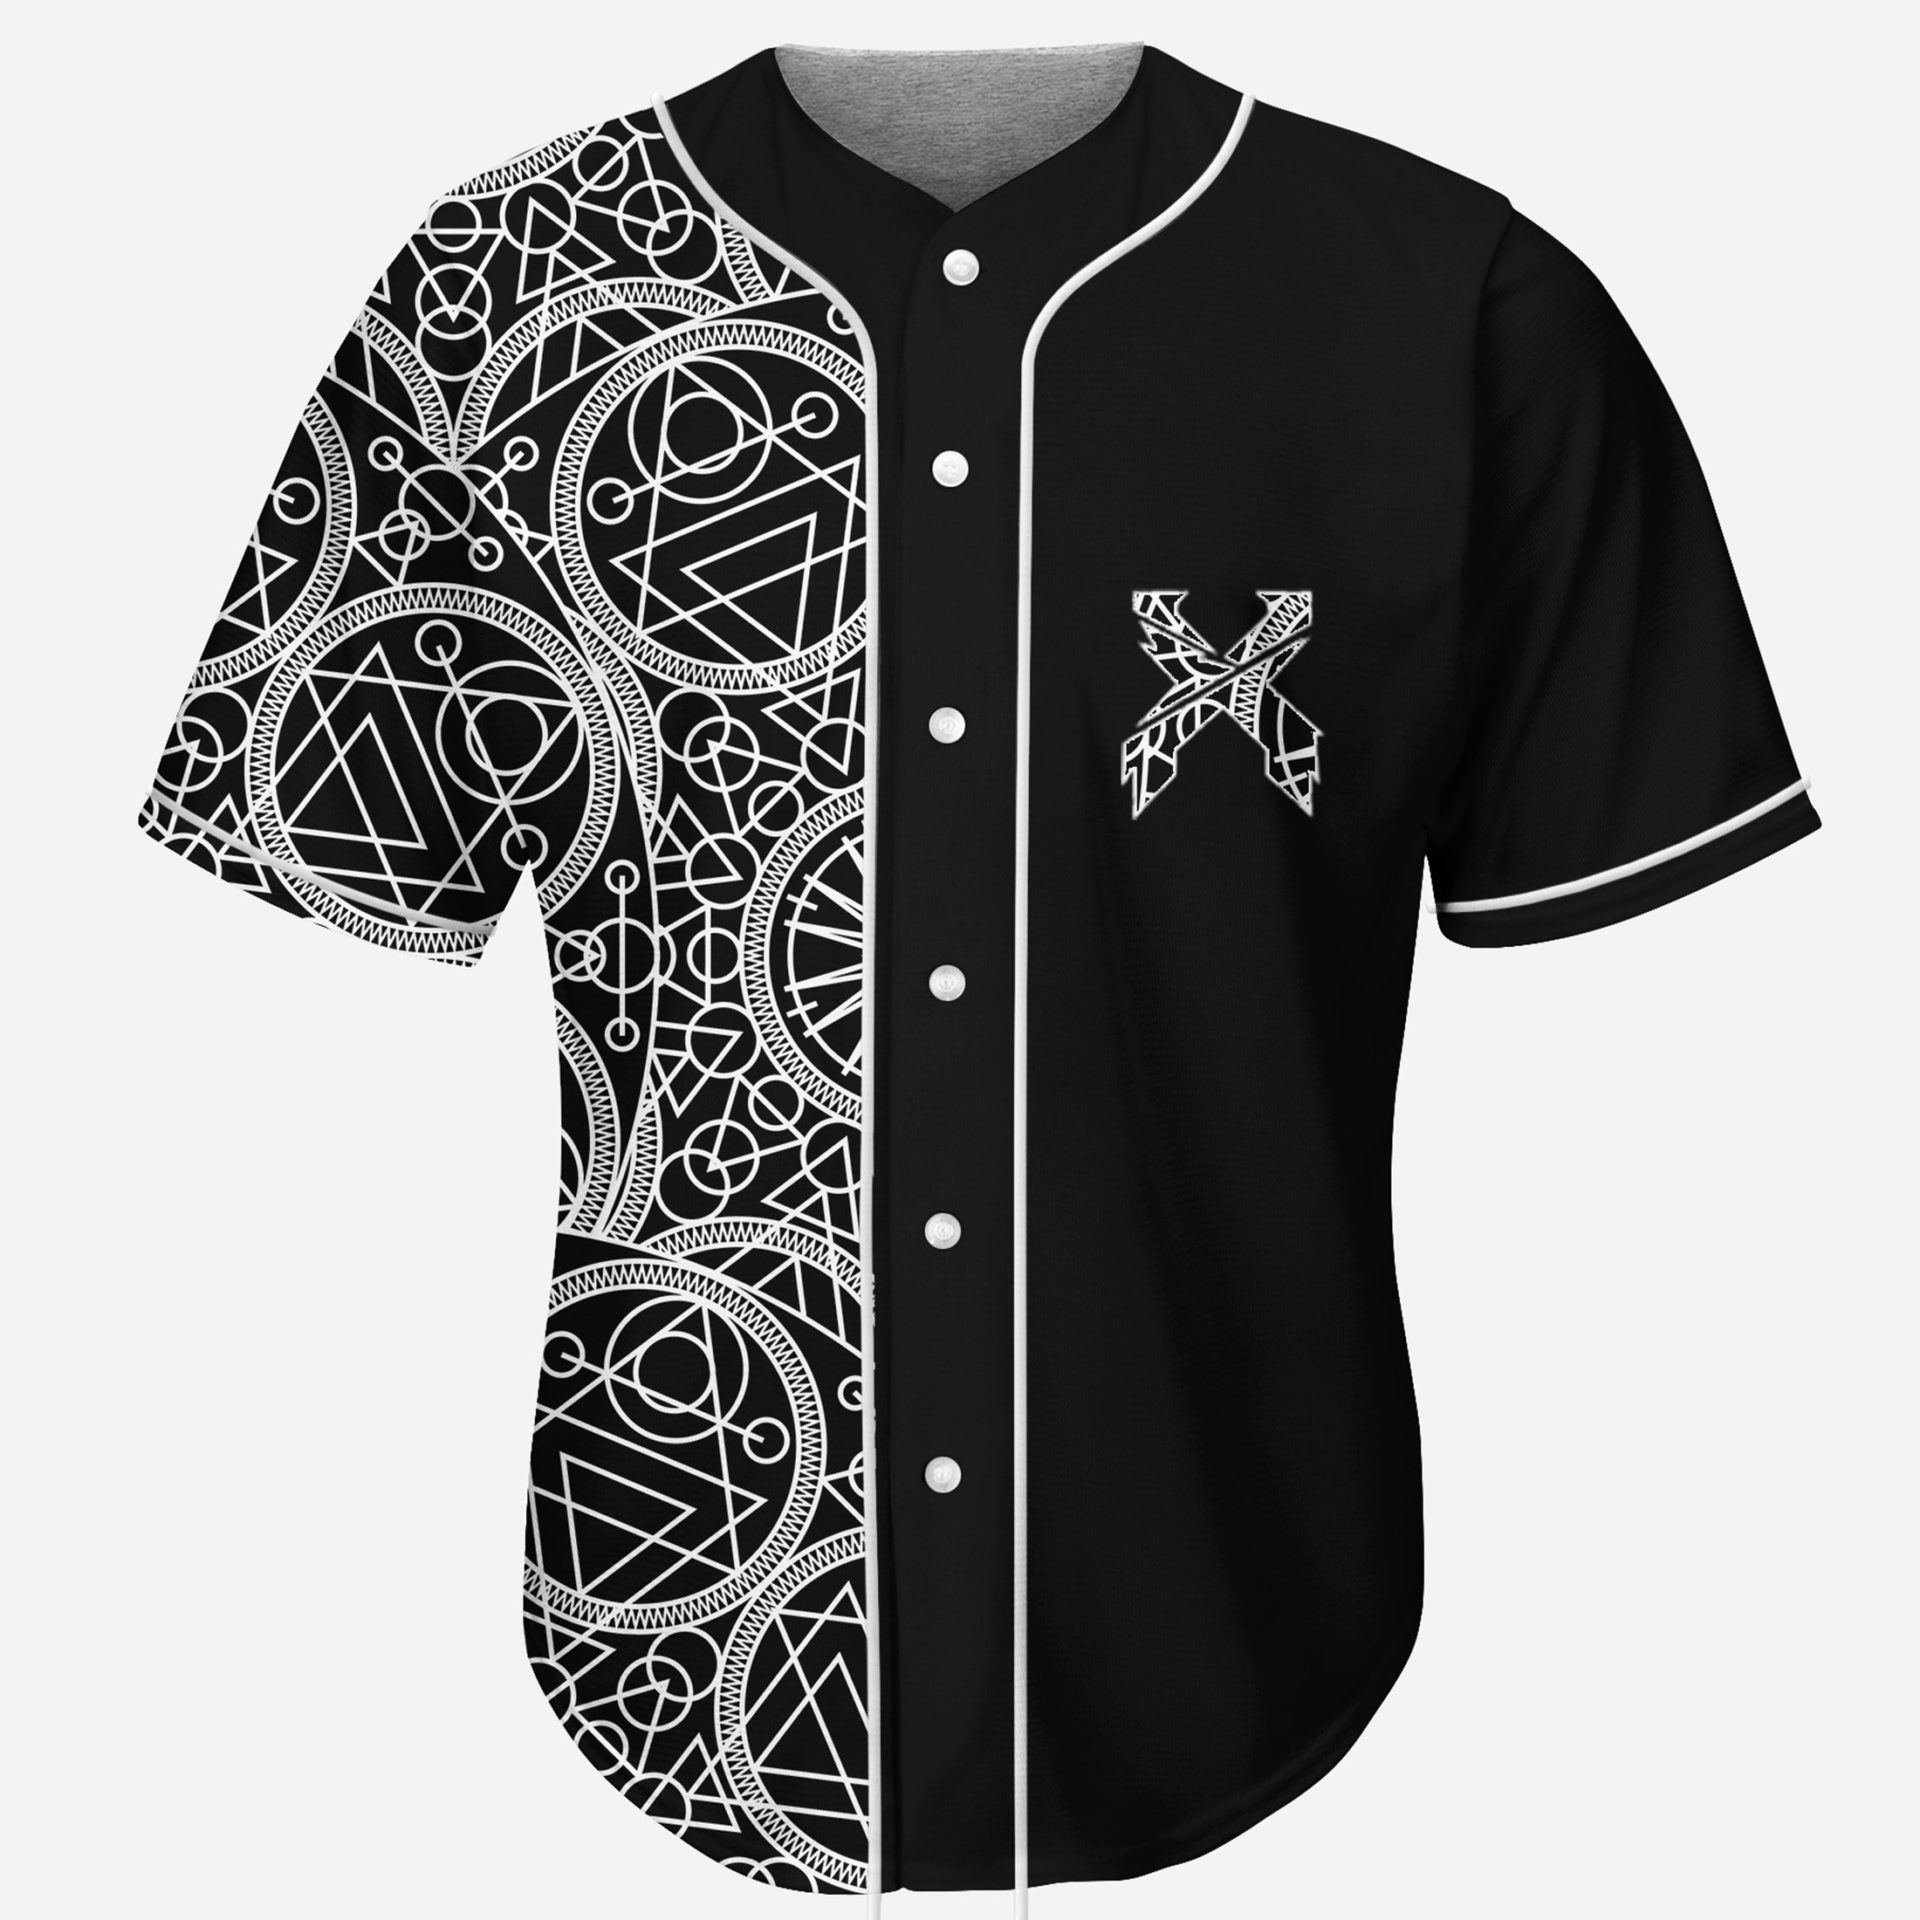 Creat Baseball Authentic Black Black Split Fashion White Jersey